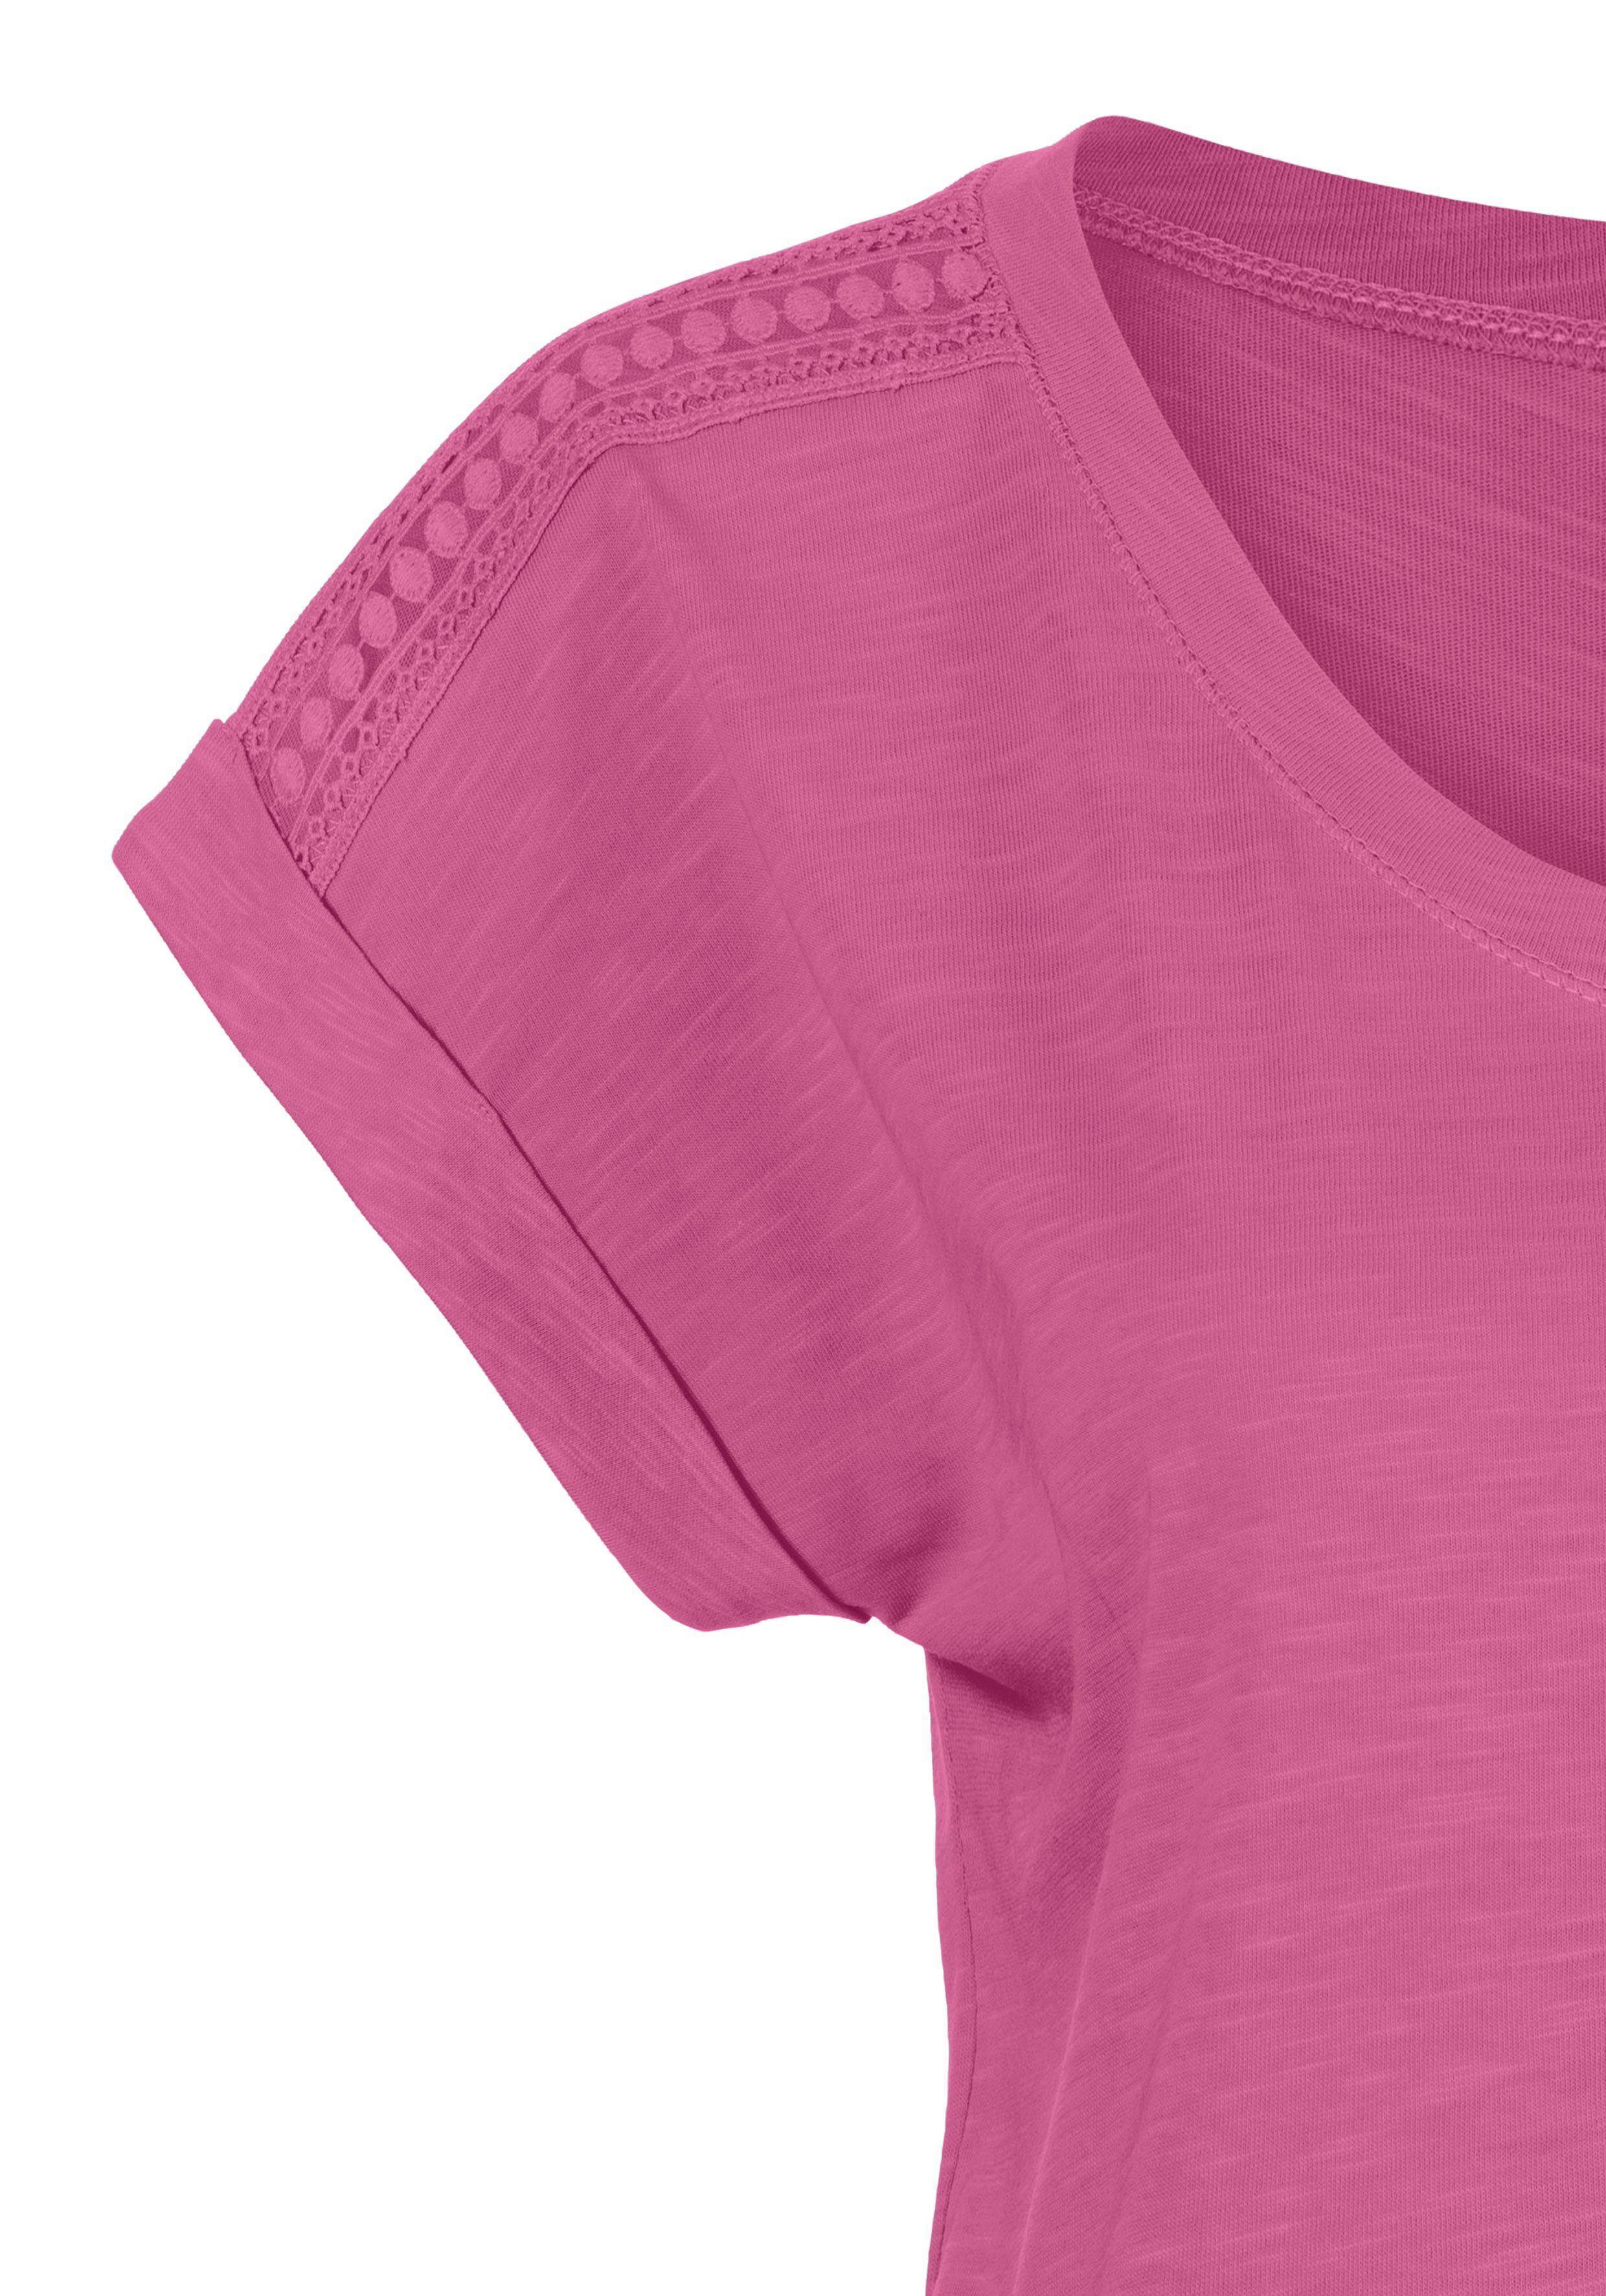 Häkelspitze Vivance mit navy T-Shirt (Packung, Schulter pink, 2er-Pack) an der